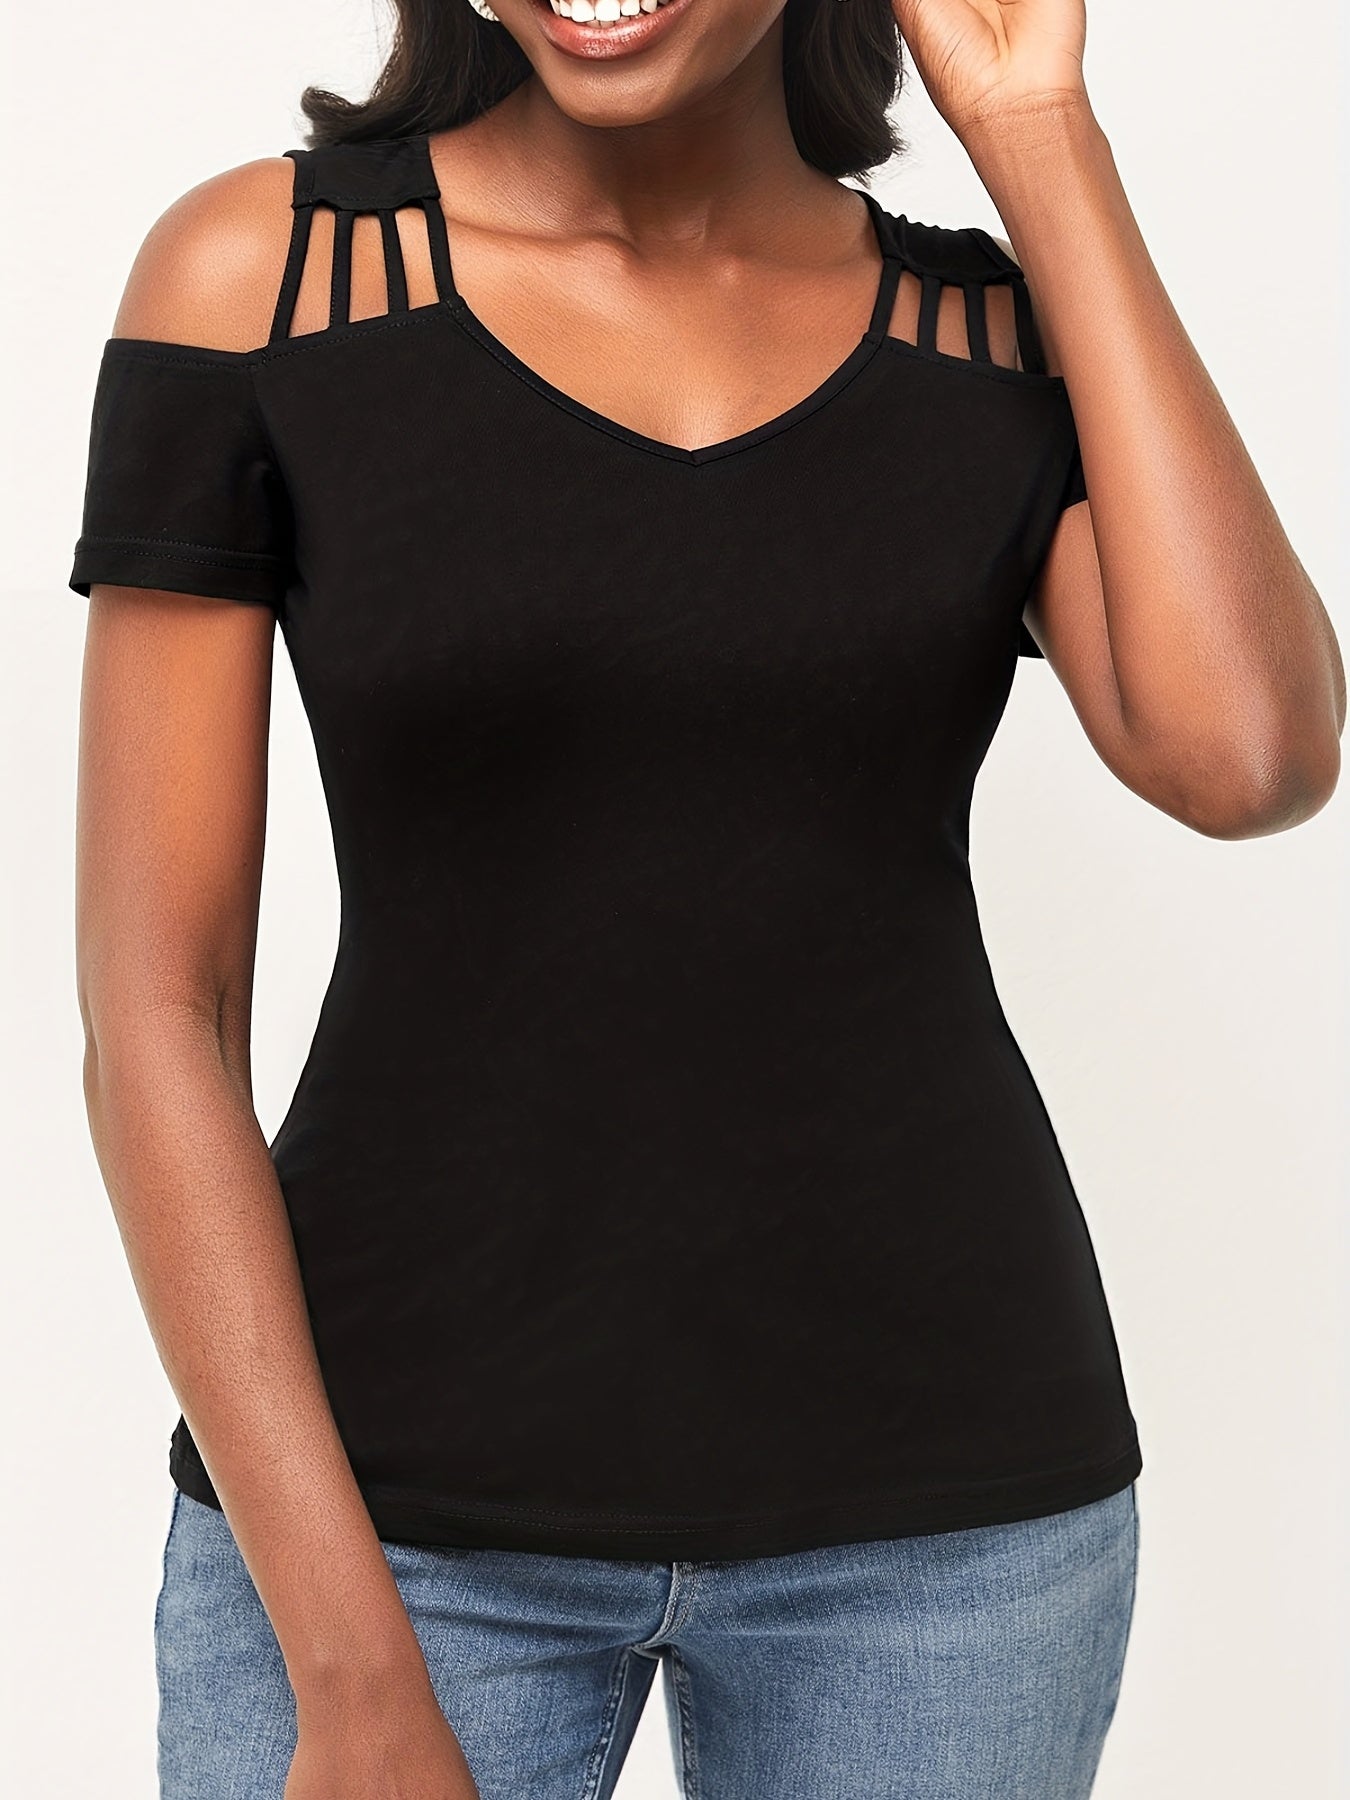 Cold Shoulder Solid T-shirt, Casual V Neck Short Sleeve Summer T-shirt, Women's Clothing